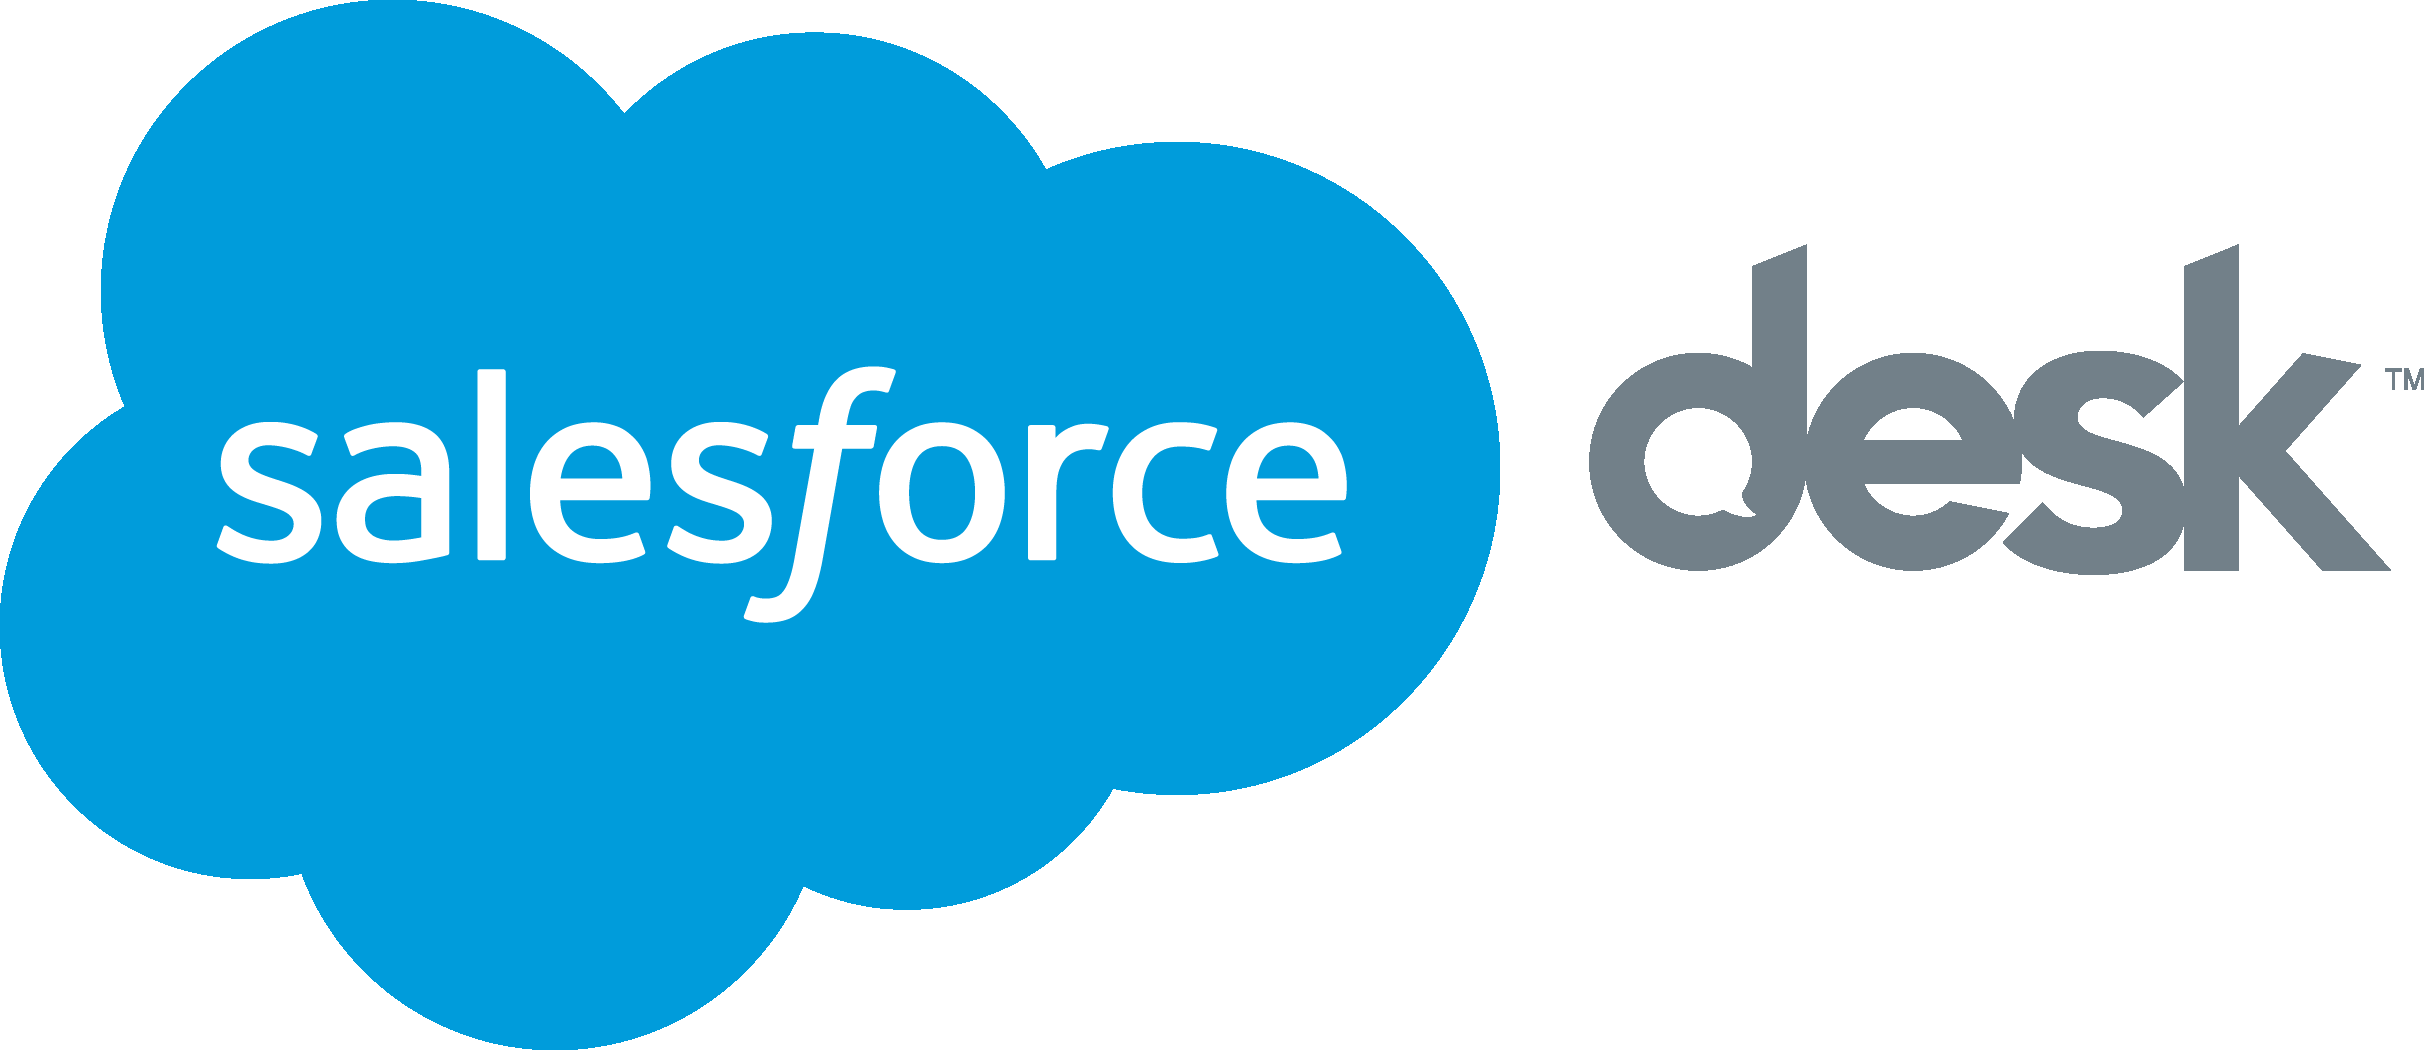 Salesforce Desk.com